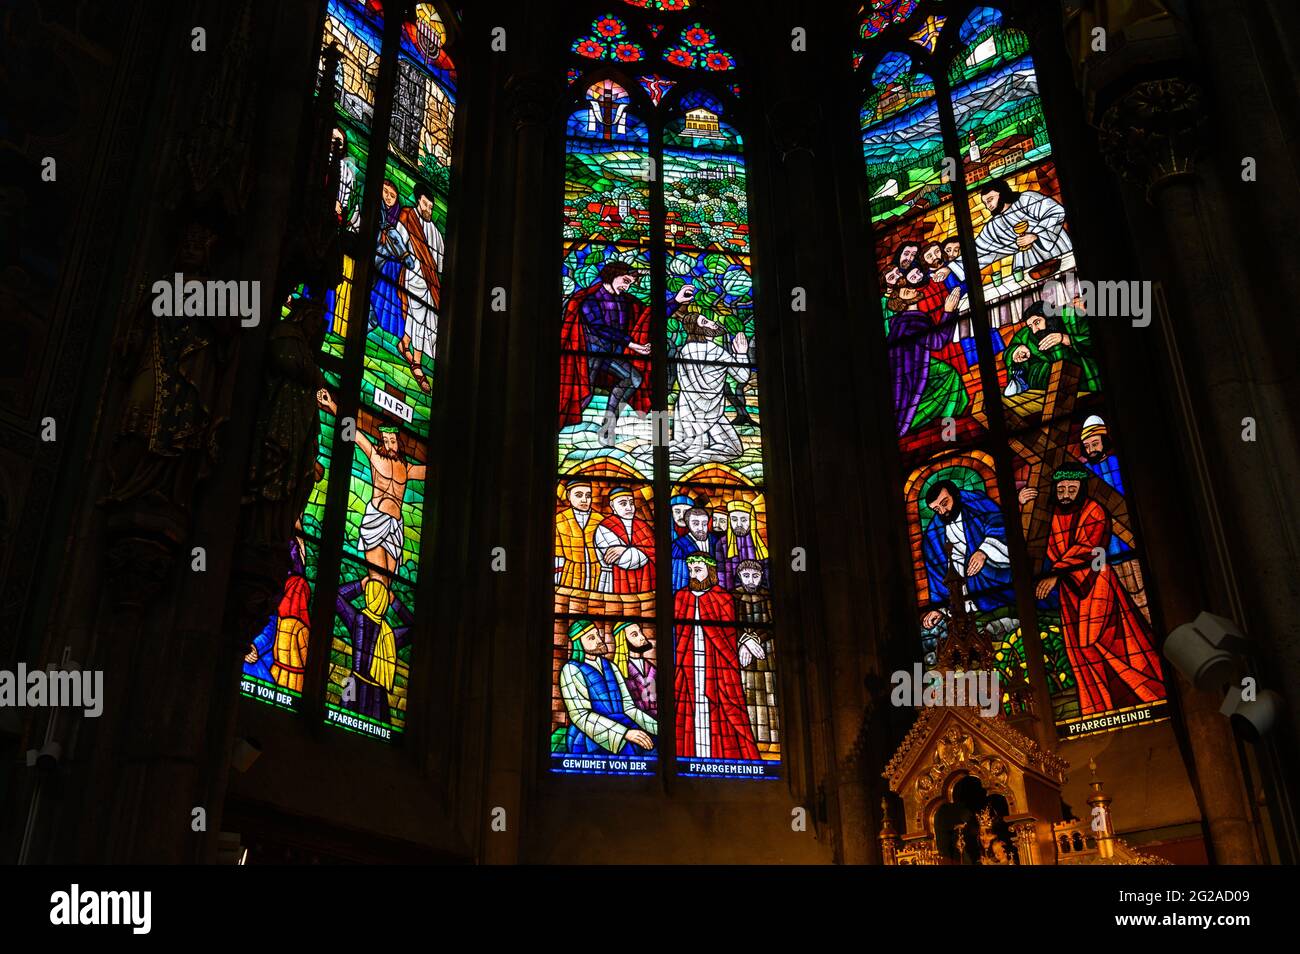 Stained-glass windows depicting the Passion of Jesus Christ. Votivkirche – Votive Church, Vienna, Austria. Stock Photo